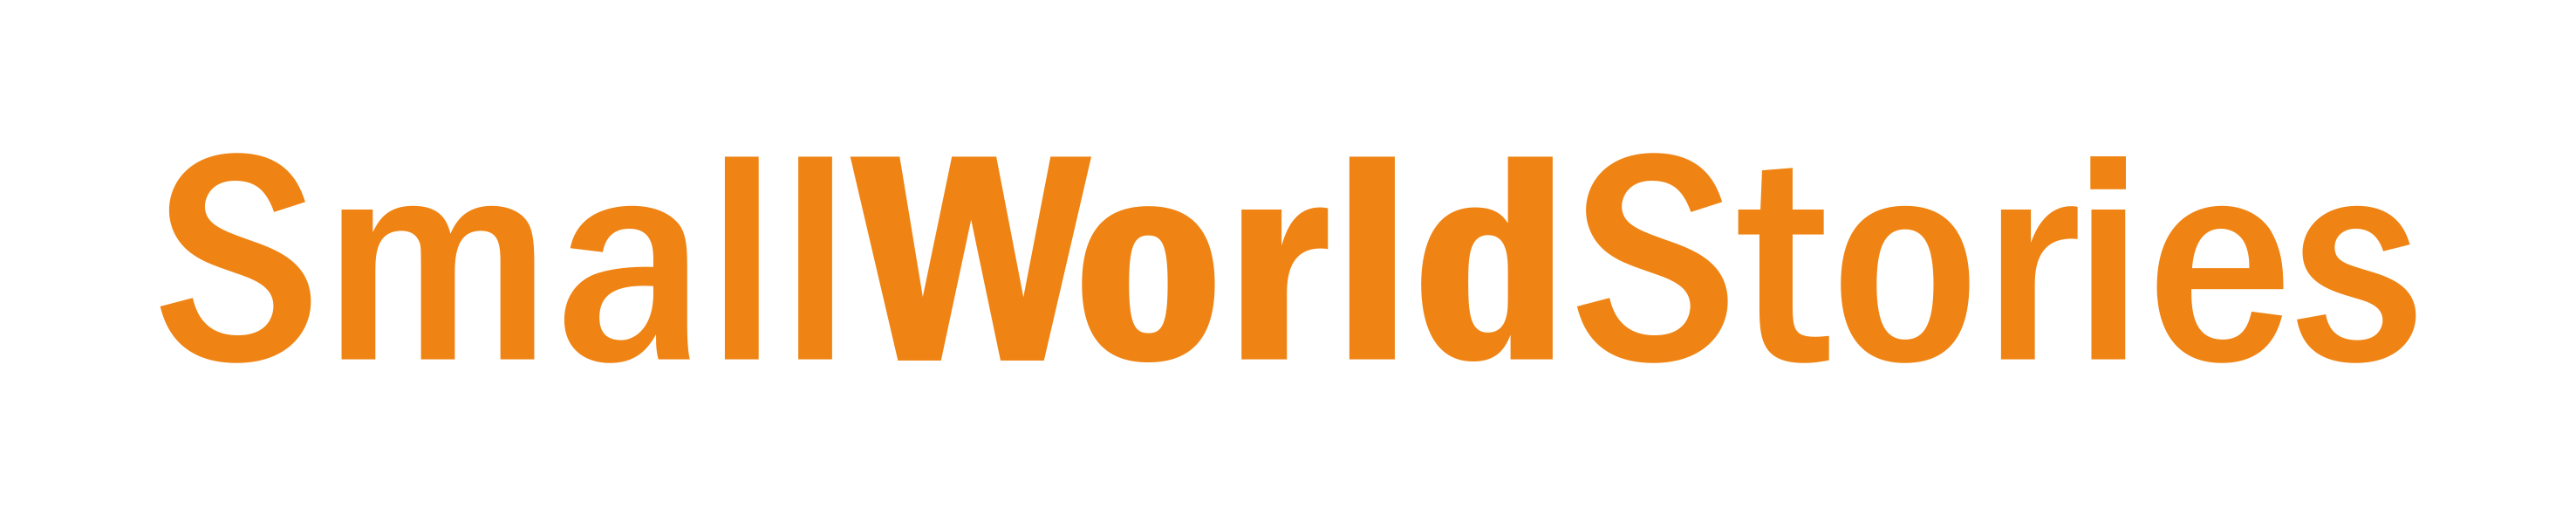 Small World Stories logo